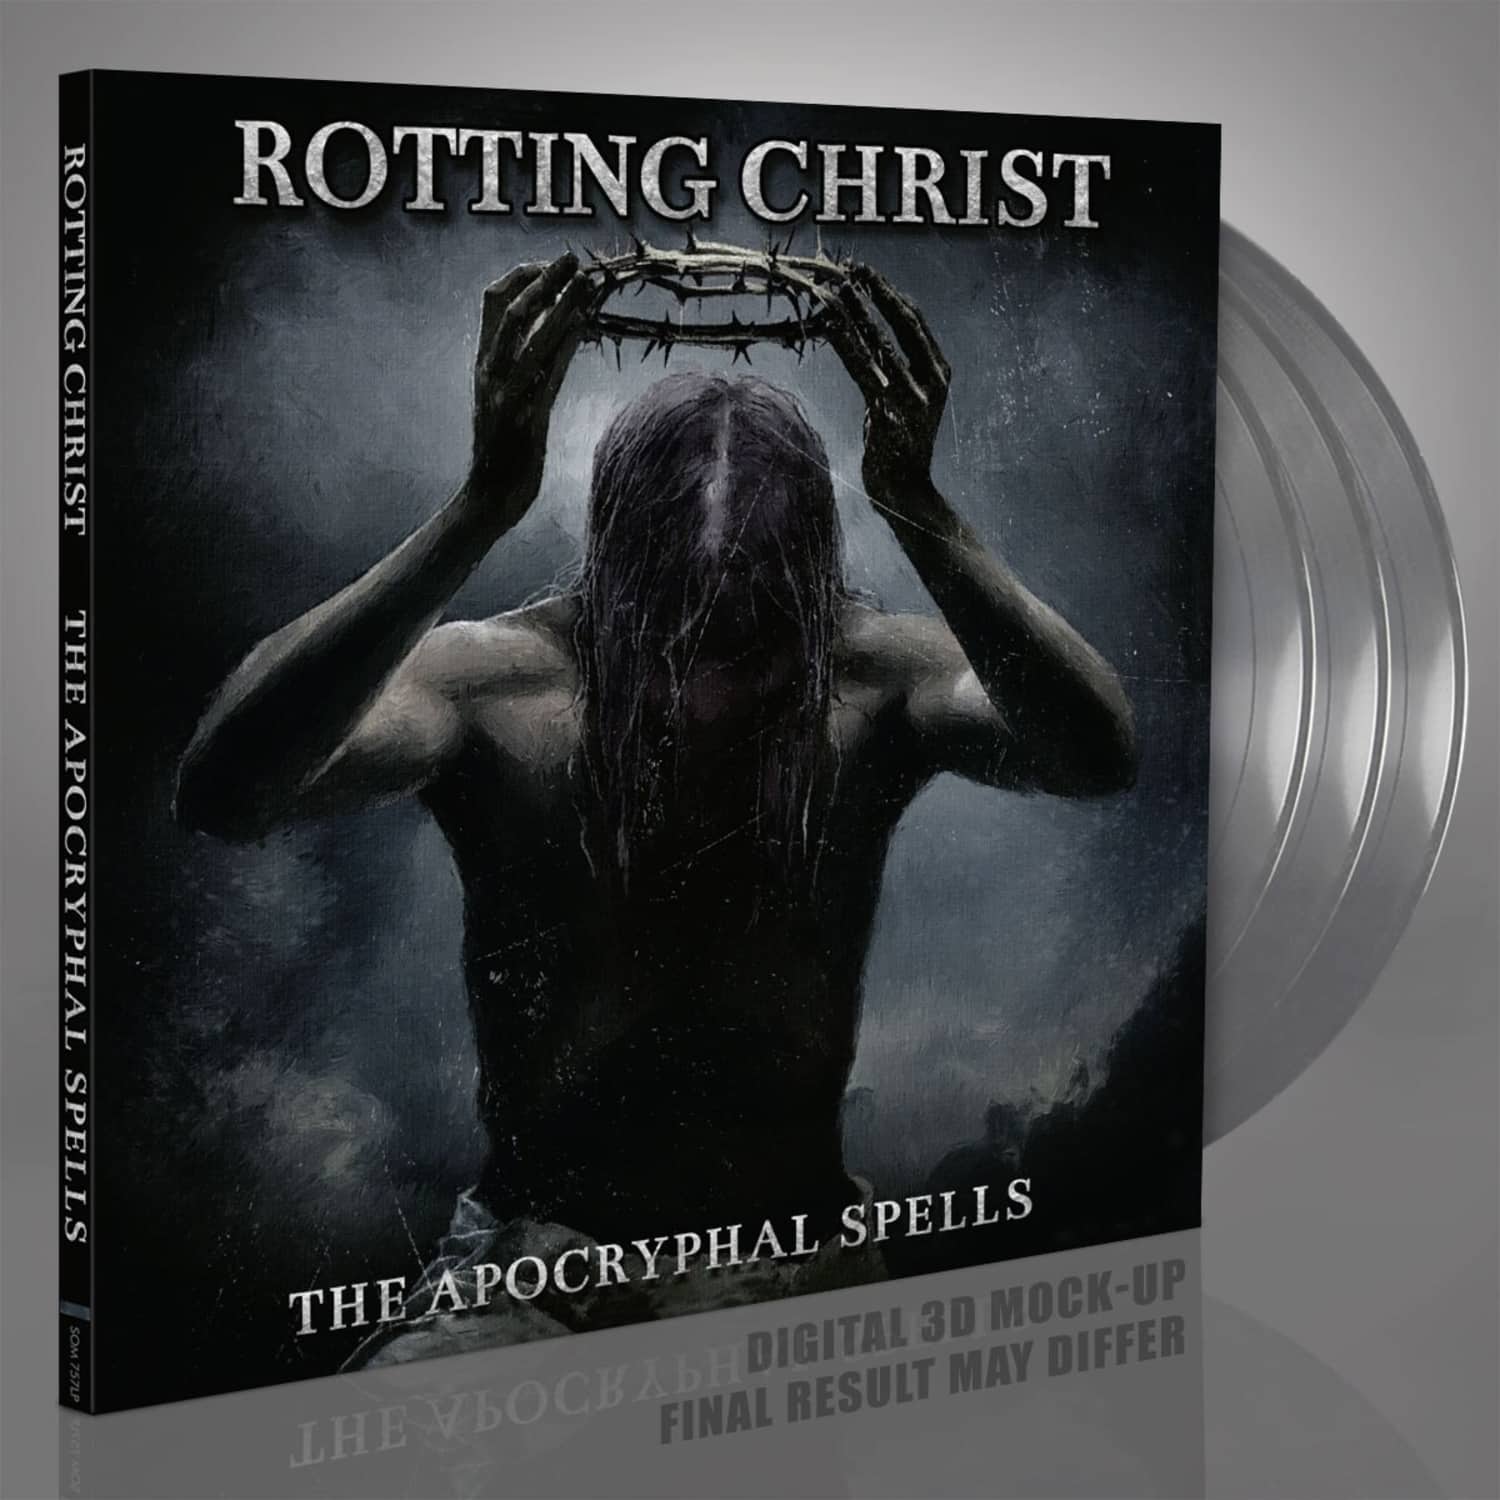 Rotting Christ - THE APOCRYPHAL SPELLS 